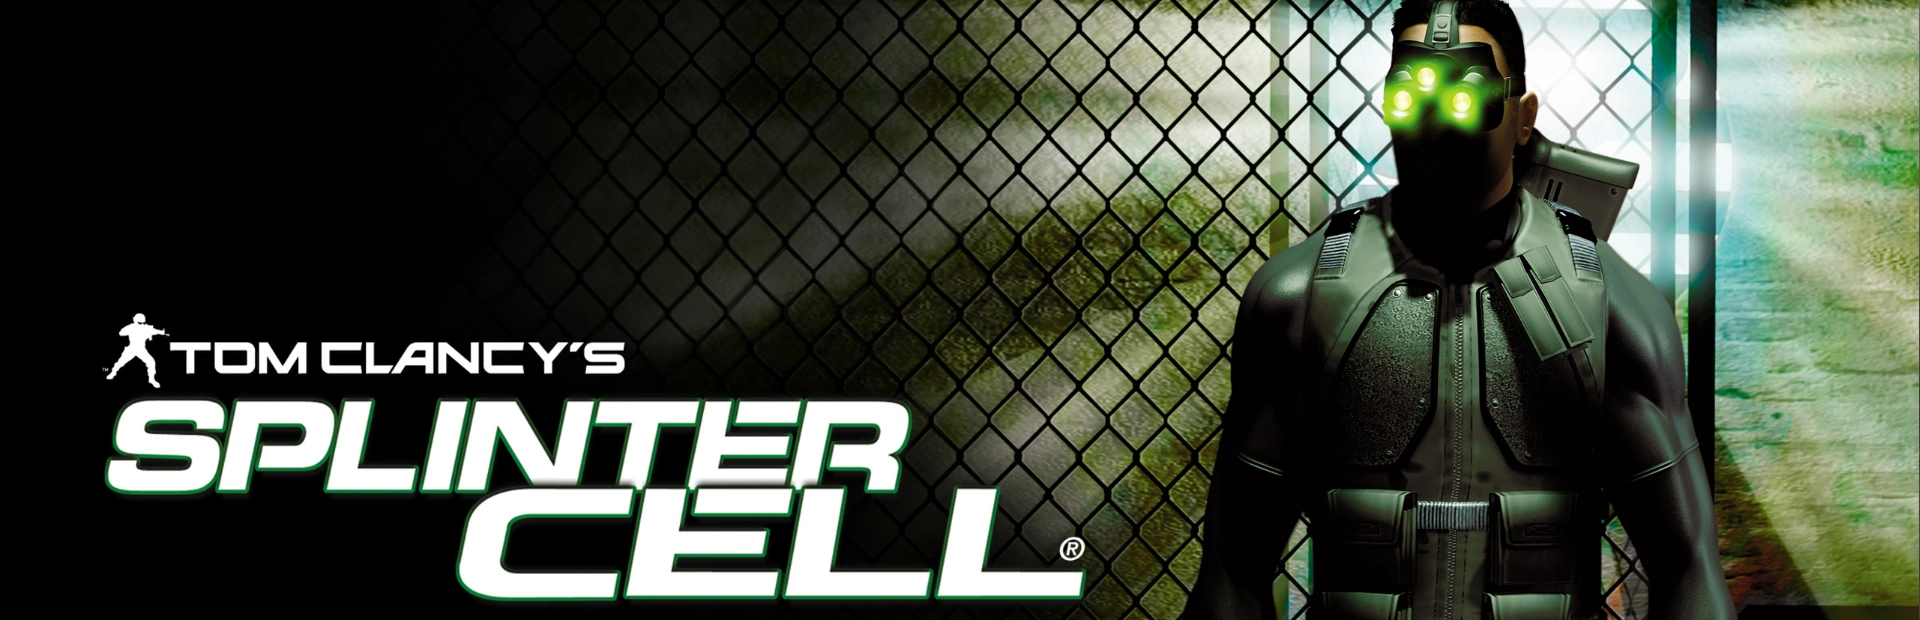 Tom Clancys Splinter Cell.banner1